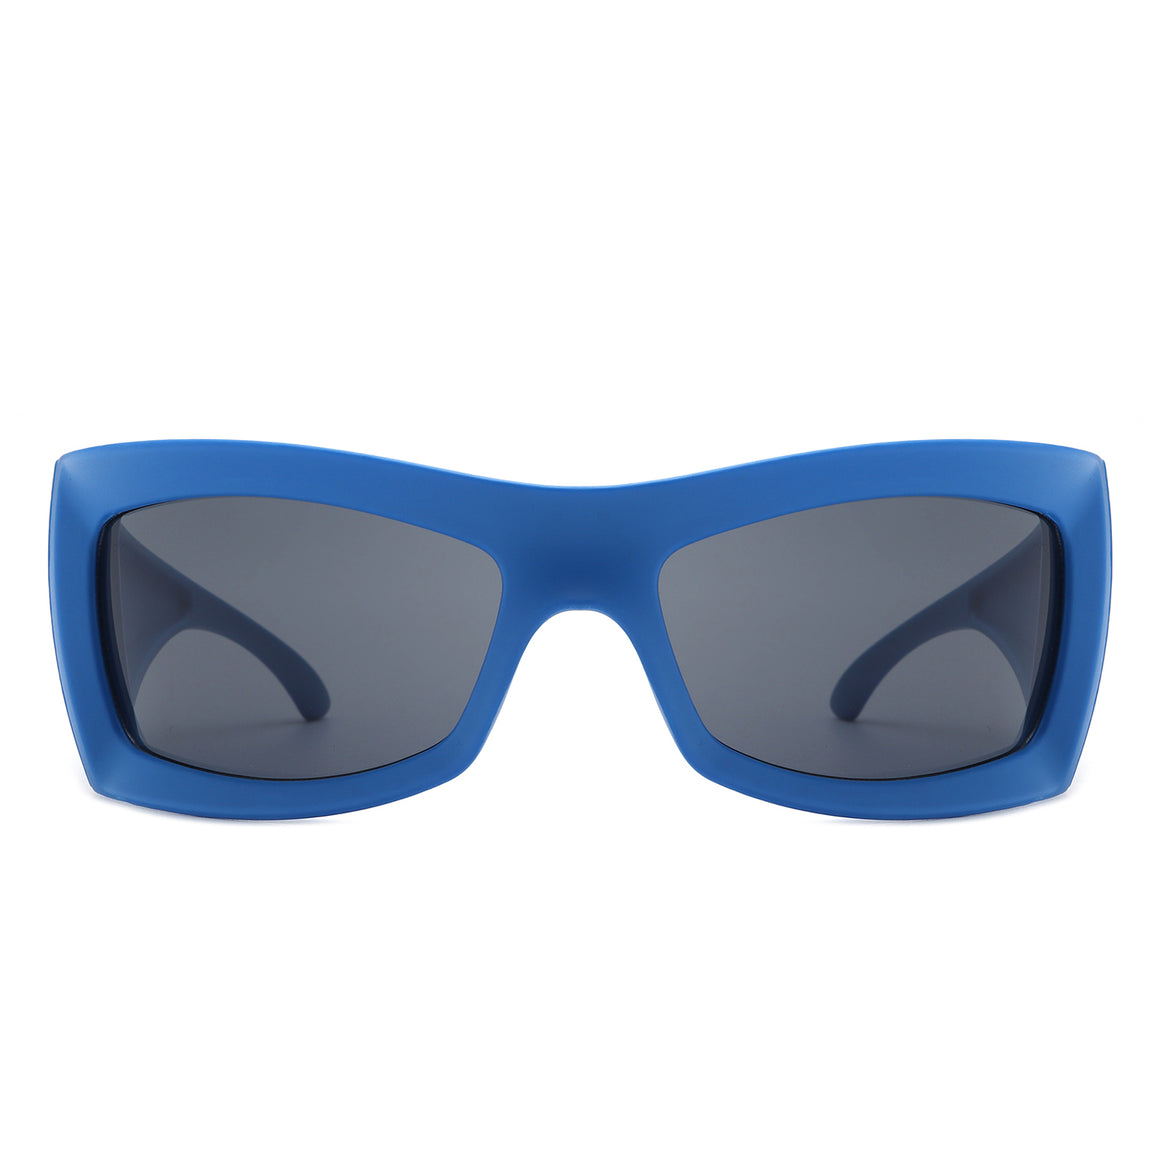 Chanel Eyewear Square Frame Sunglasses in Blue